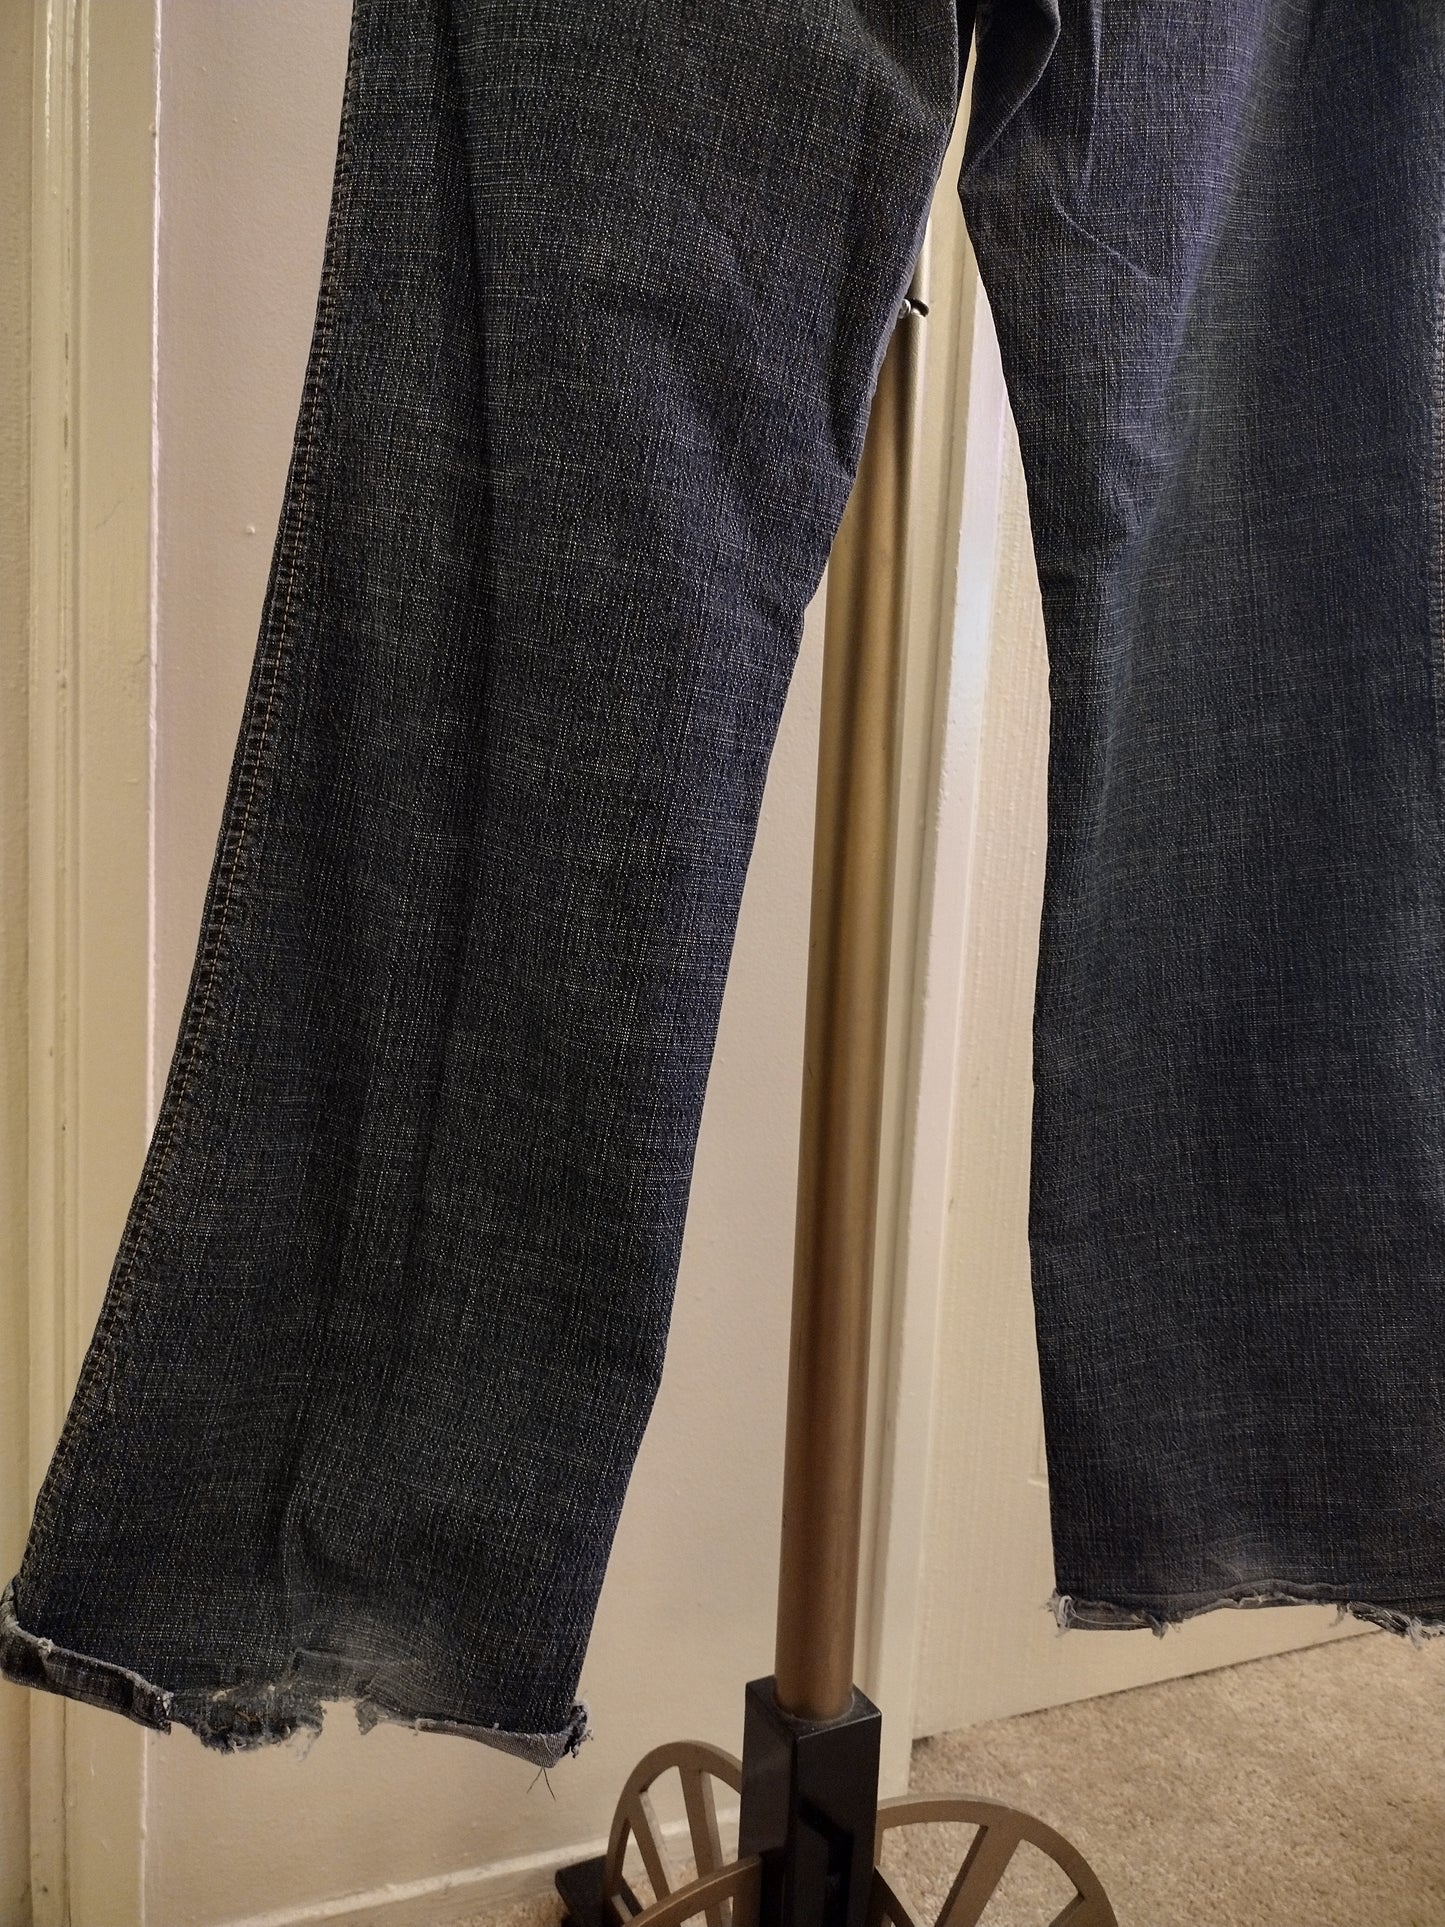 Reflex Pure, Rare + Extreme Women's Plus Size Jeans